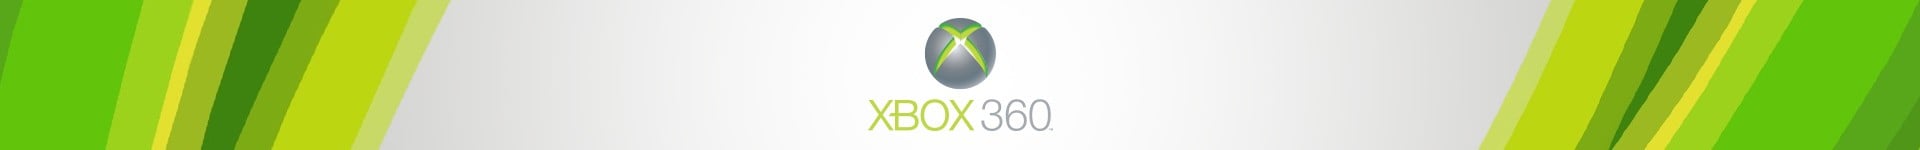 Xbox 360 tilbehør